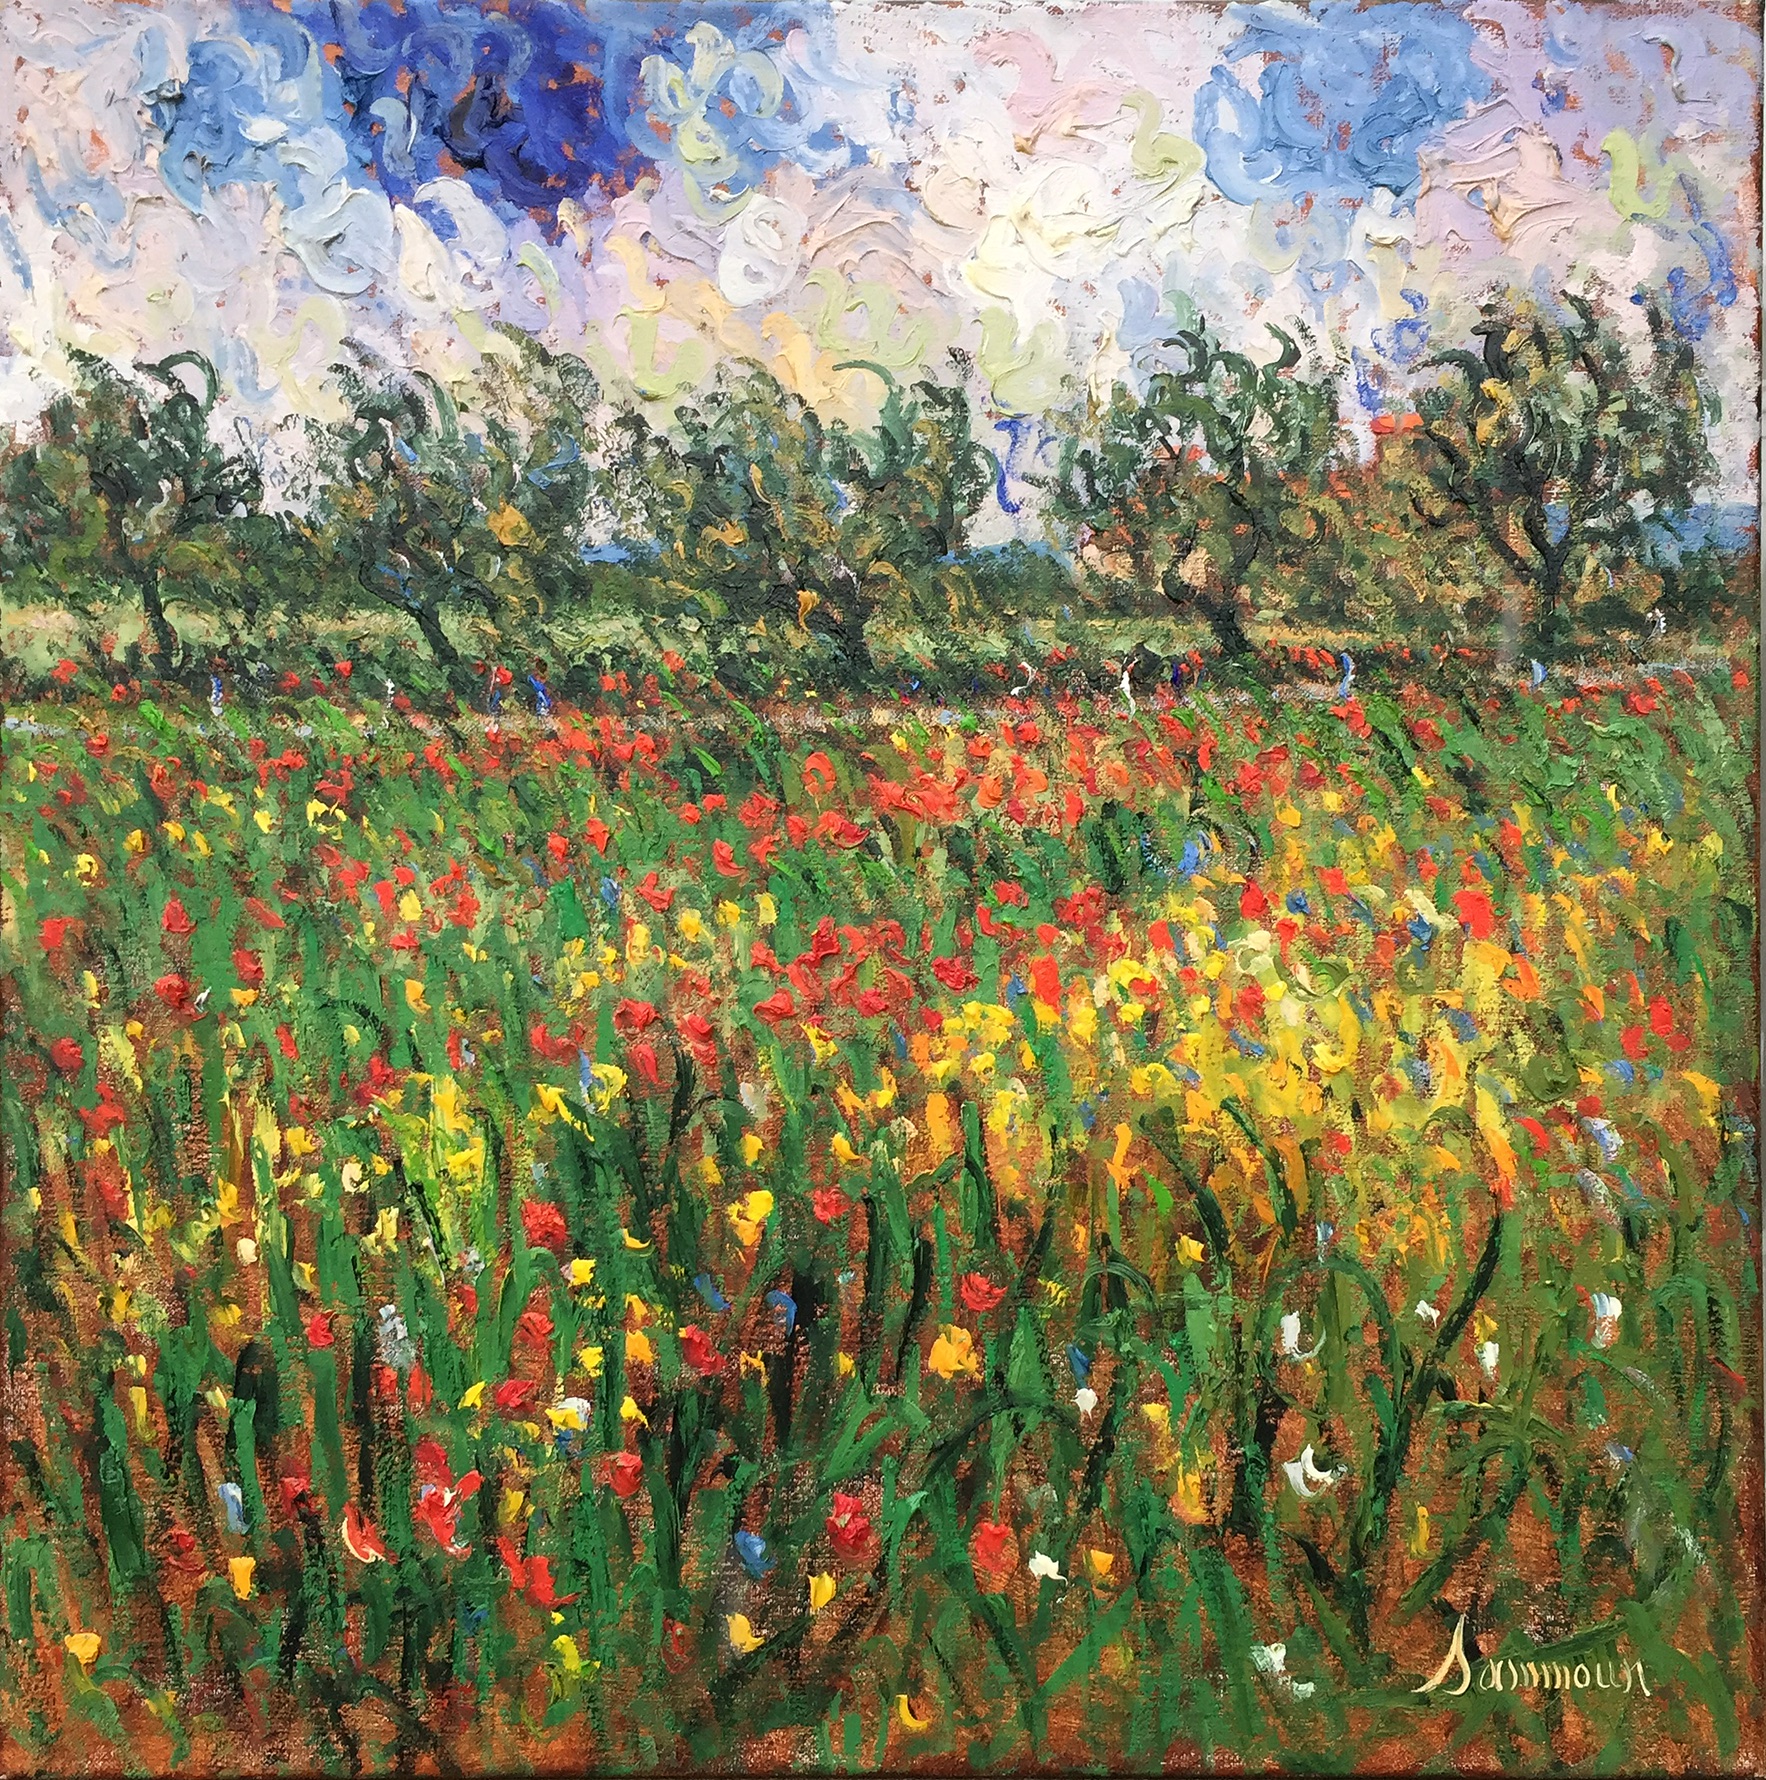 SAMIR SAMMOUN - Farm House, Olive Trees & Poppies - Oil on Canvas - 30 x 30 inches